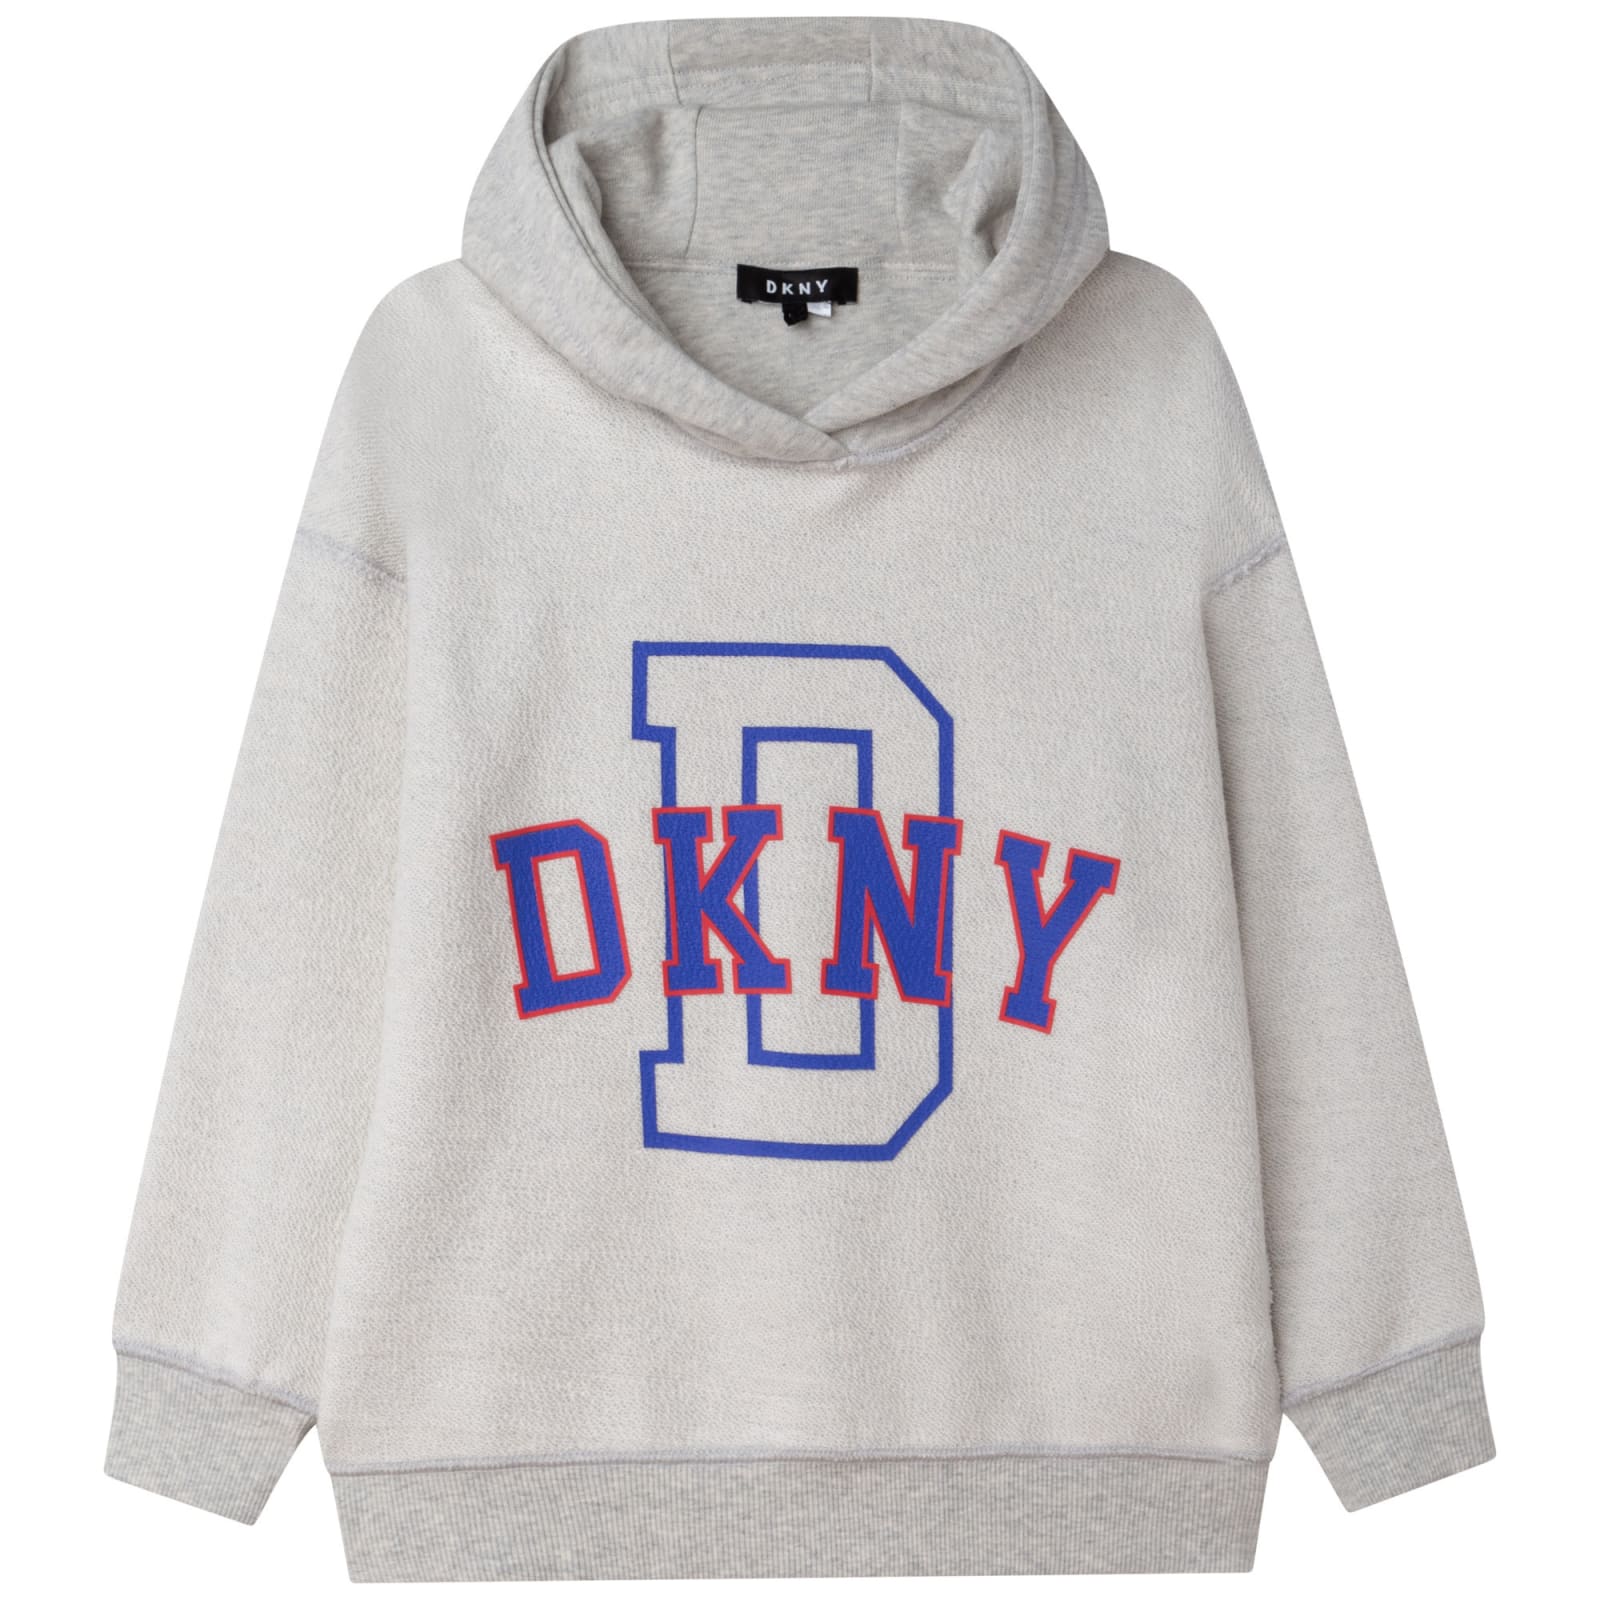 DKNY Reversible Sweatshirt